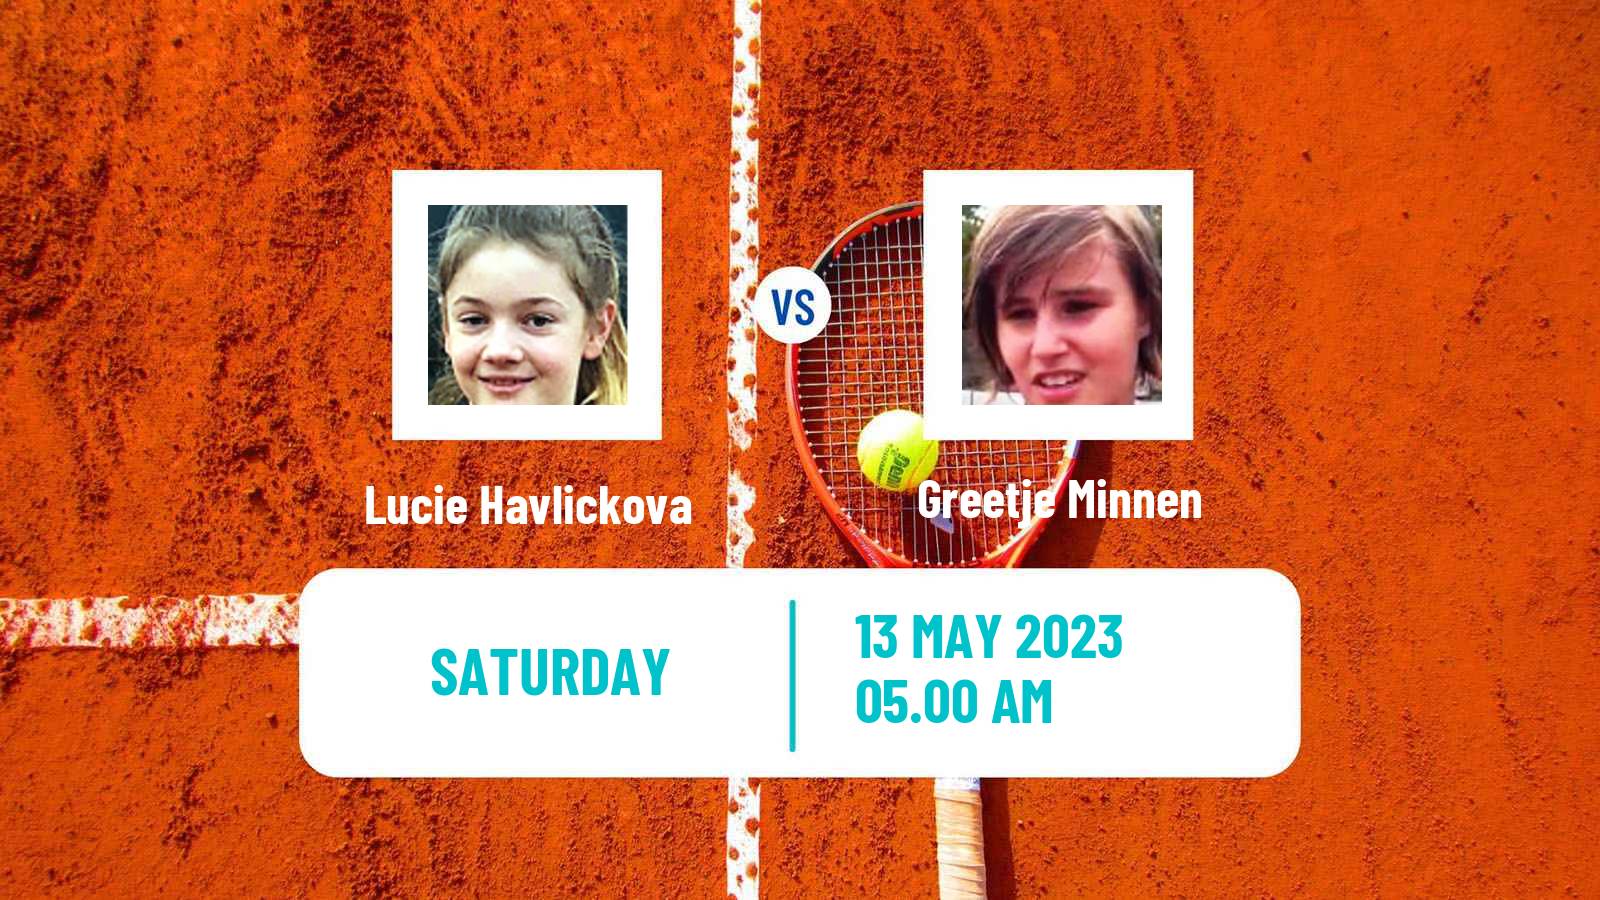 Tennis ITF Tournaments Lucie Havlickova - Greetje Minnen